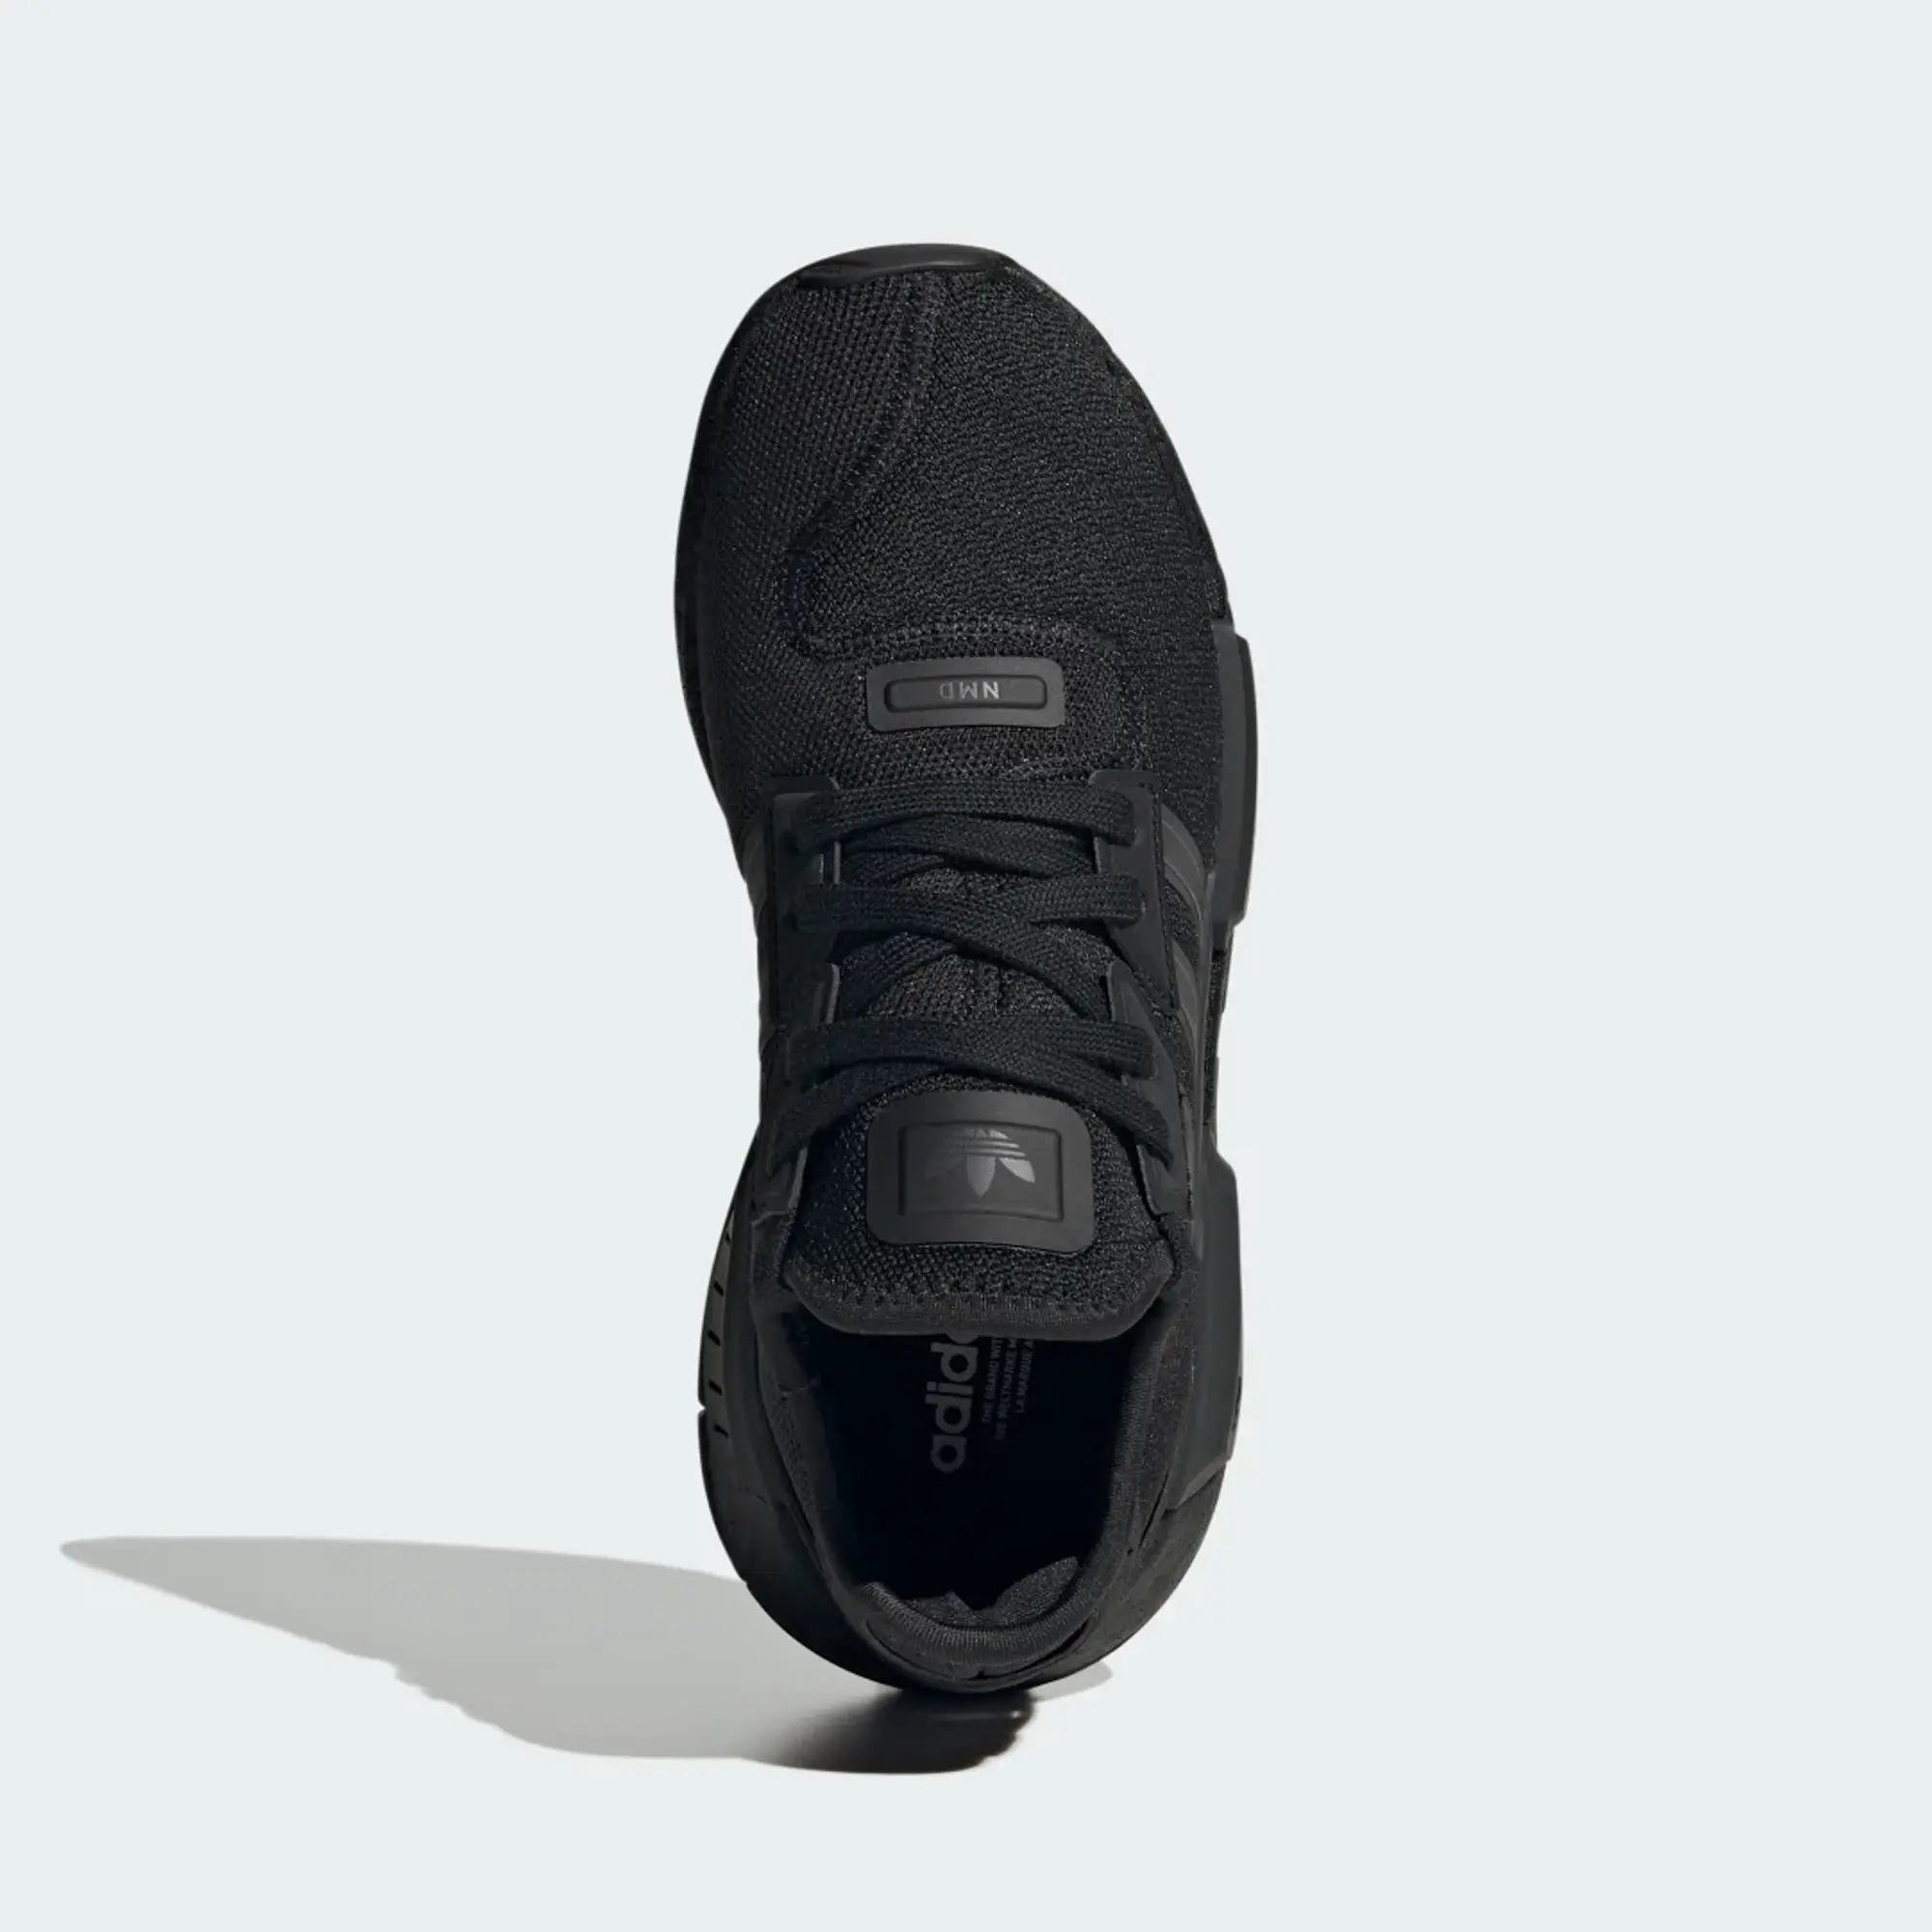 Adidas Nmd G1 - Black